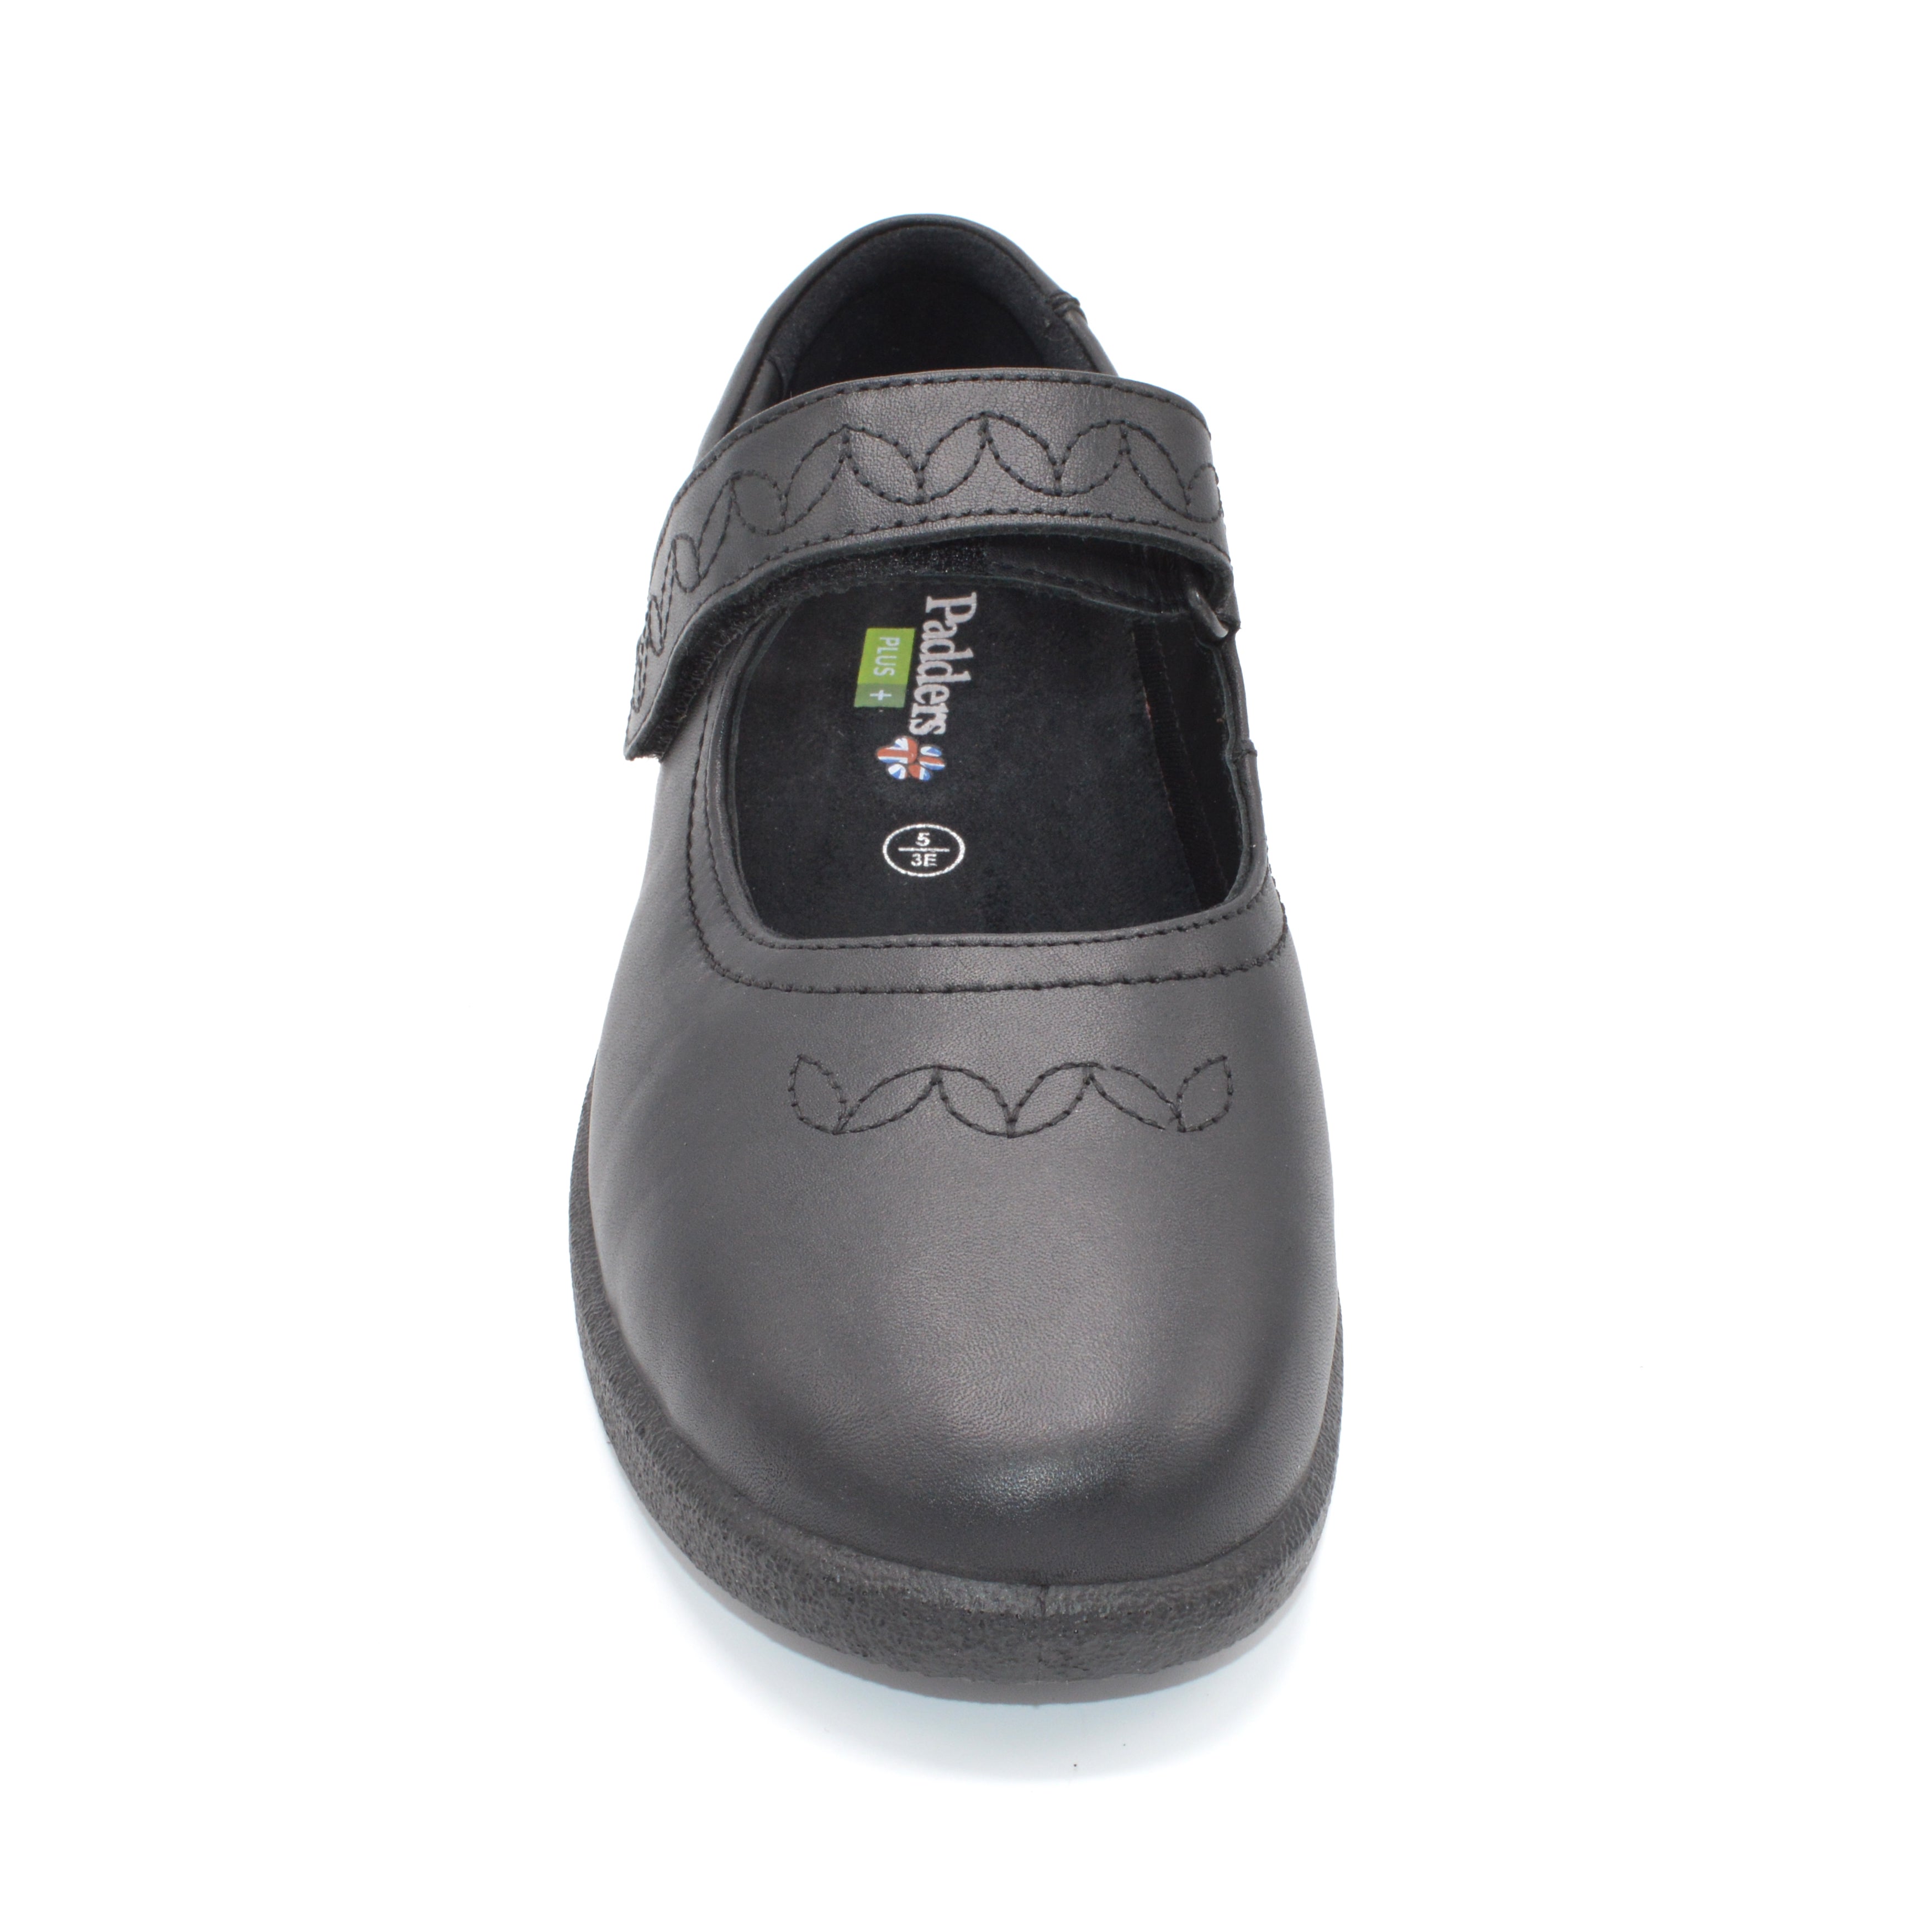 Black Velcro Ladies Shoes For Swollen Feet